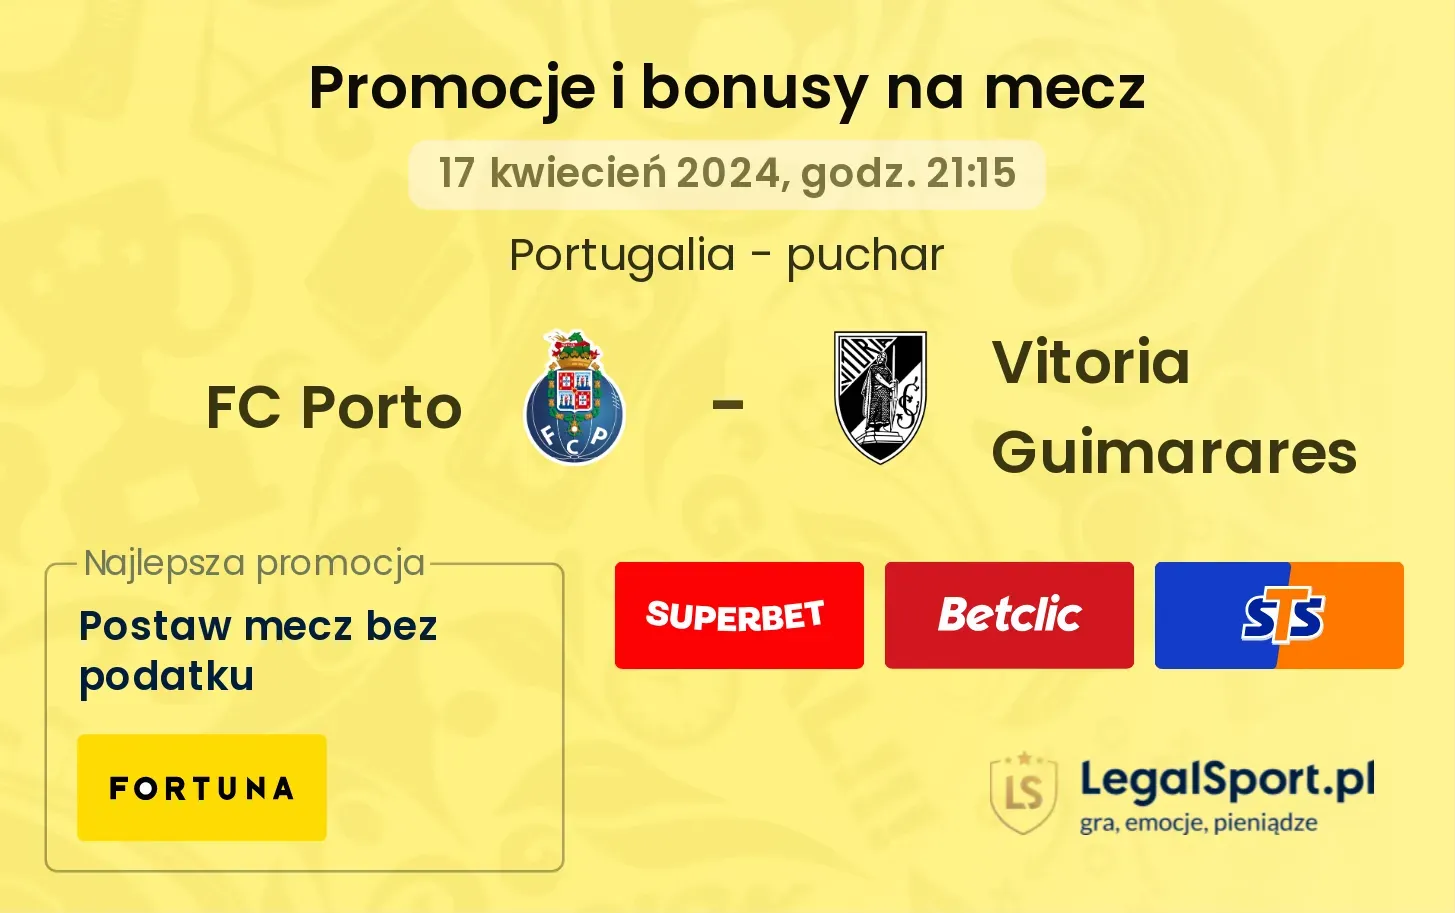 FC Porto - Vitoria Guimarares promocje bonusy na mecz